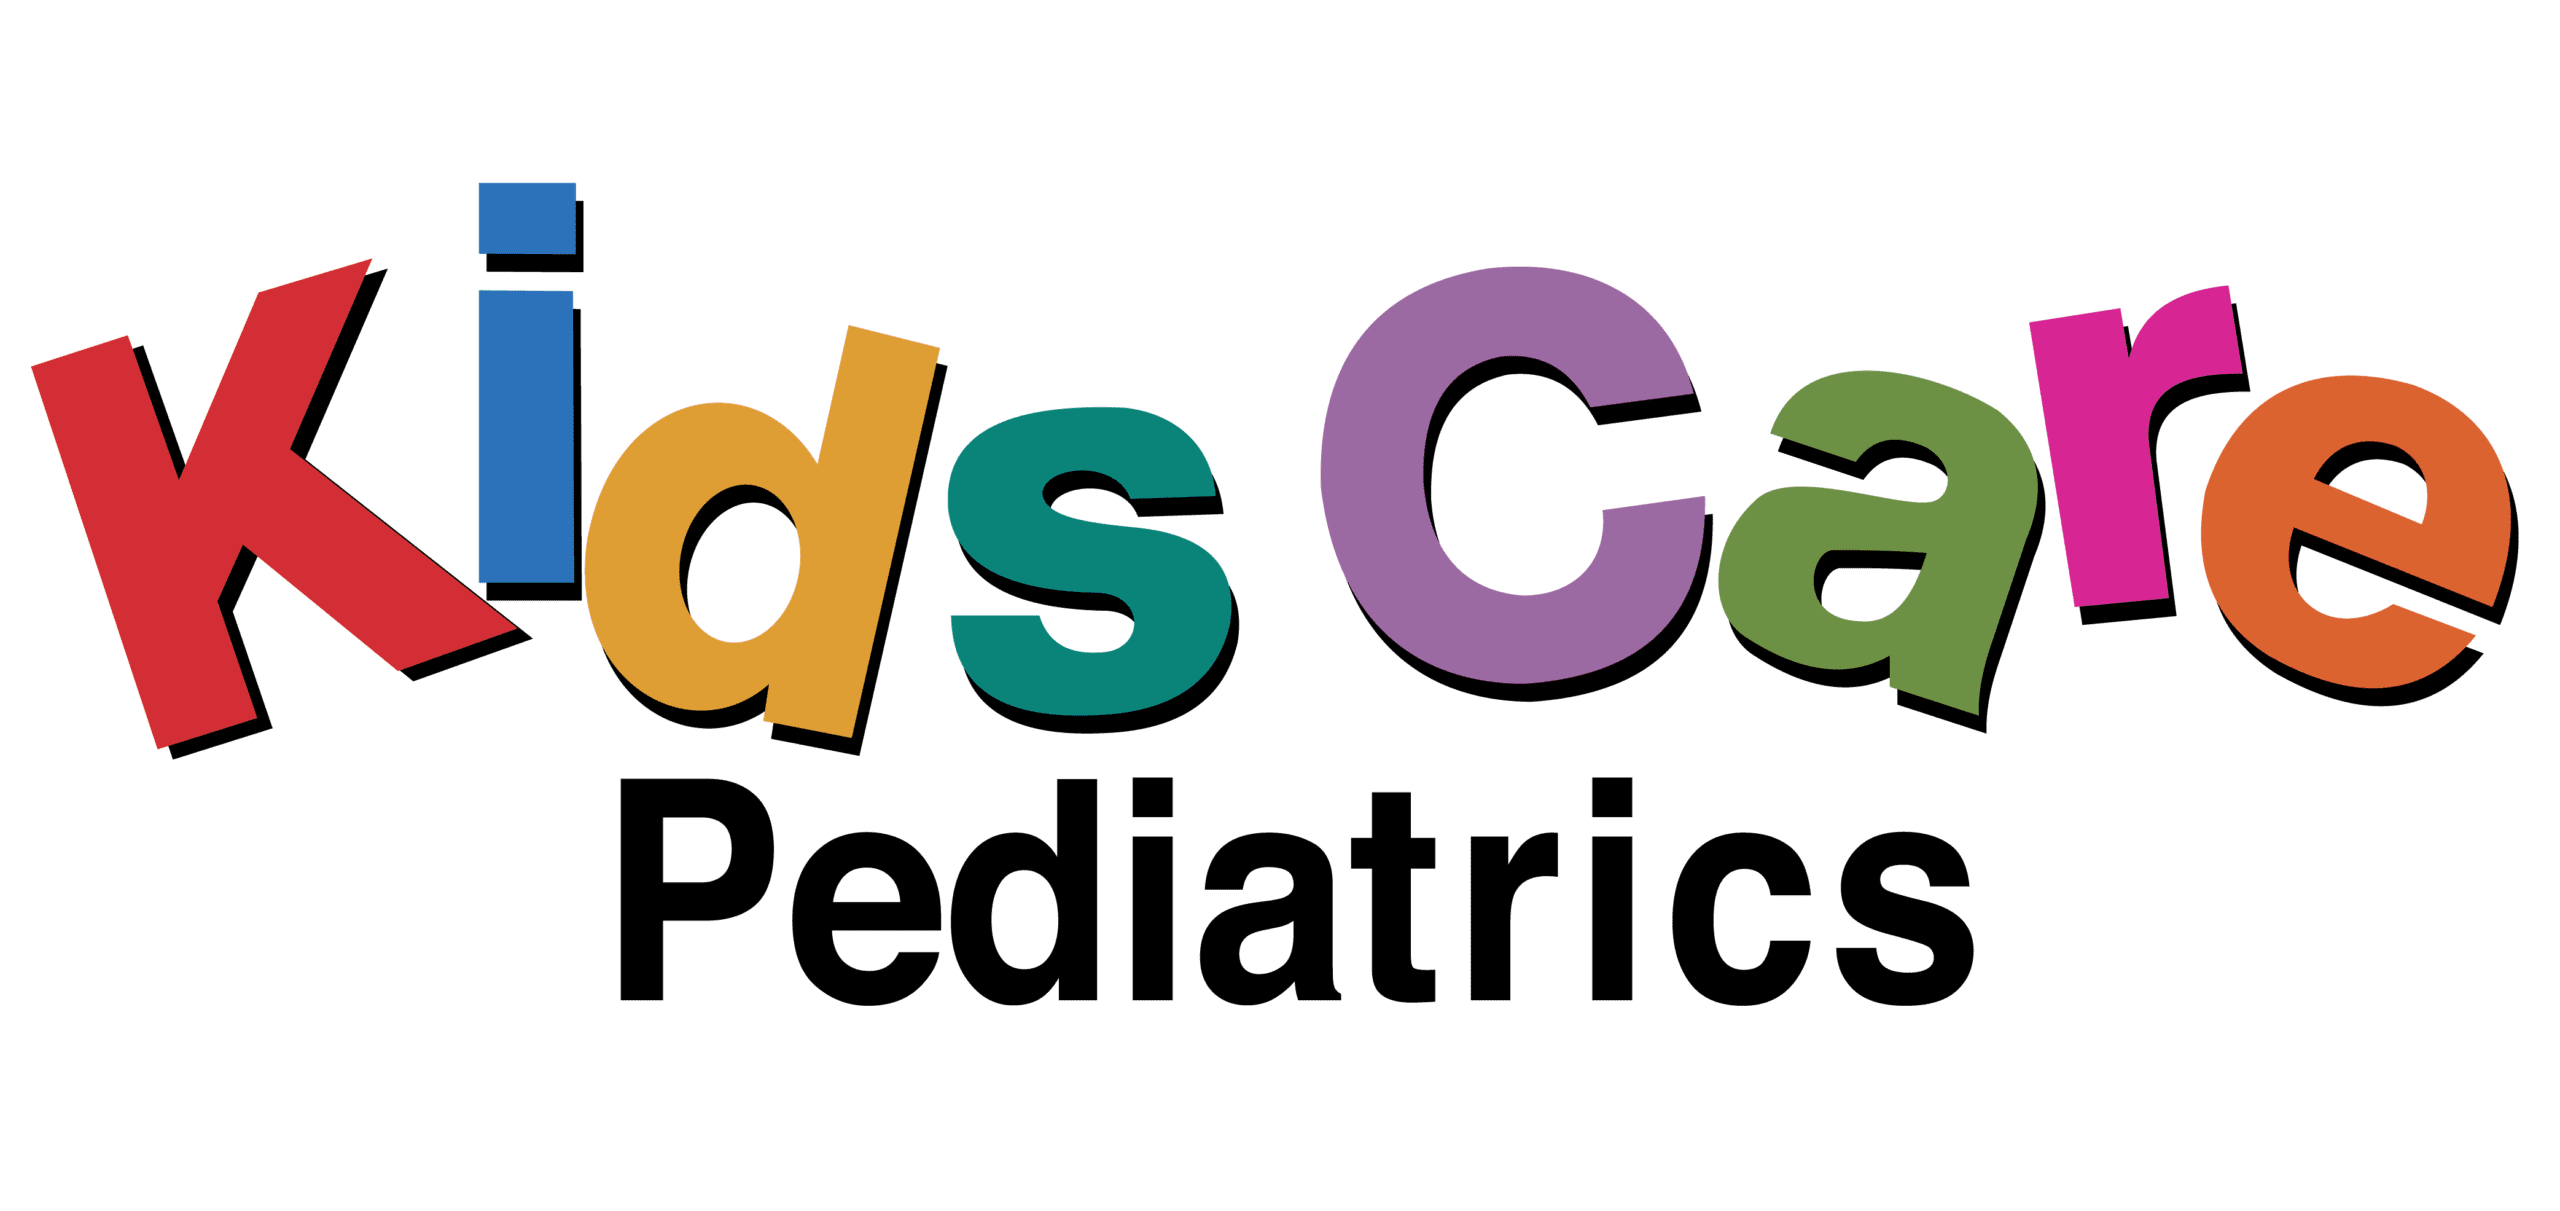 Kids Care Pediatrics Crunchbase